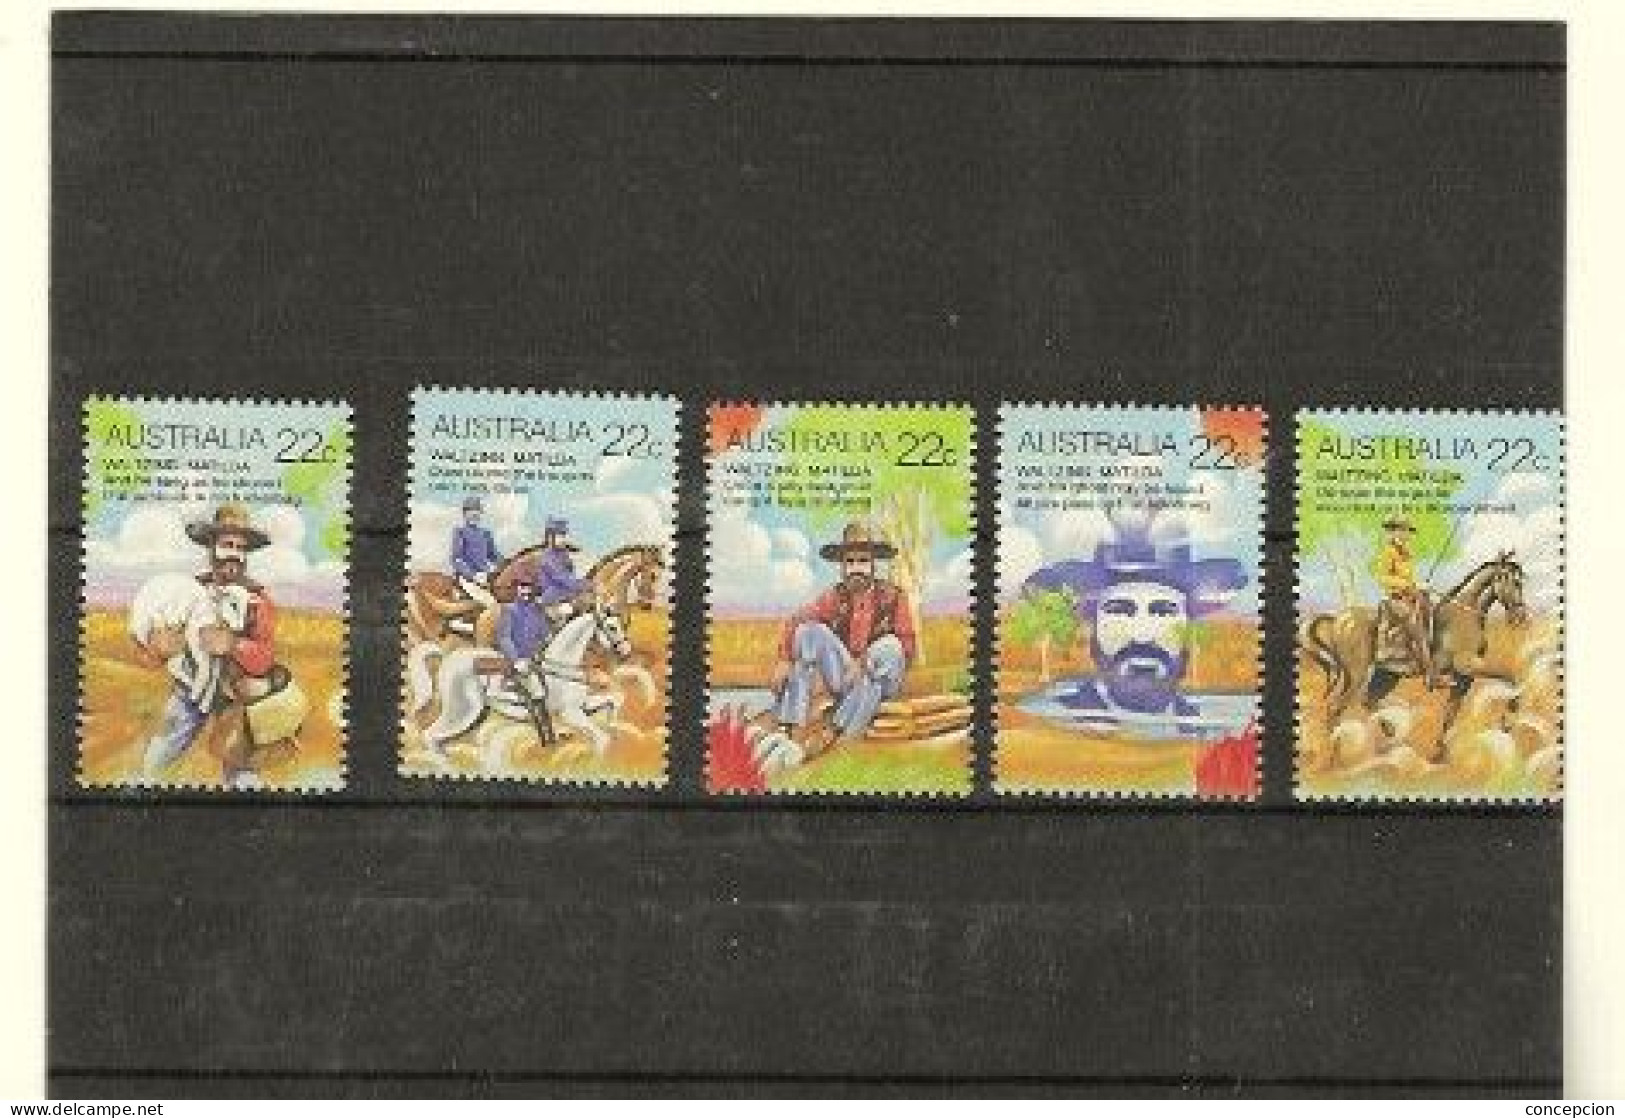 AUSTRALIA Nº 698 AL 702 - Mint Stamps